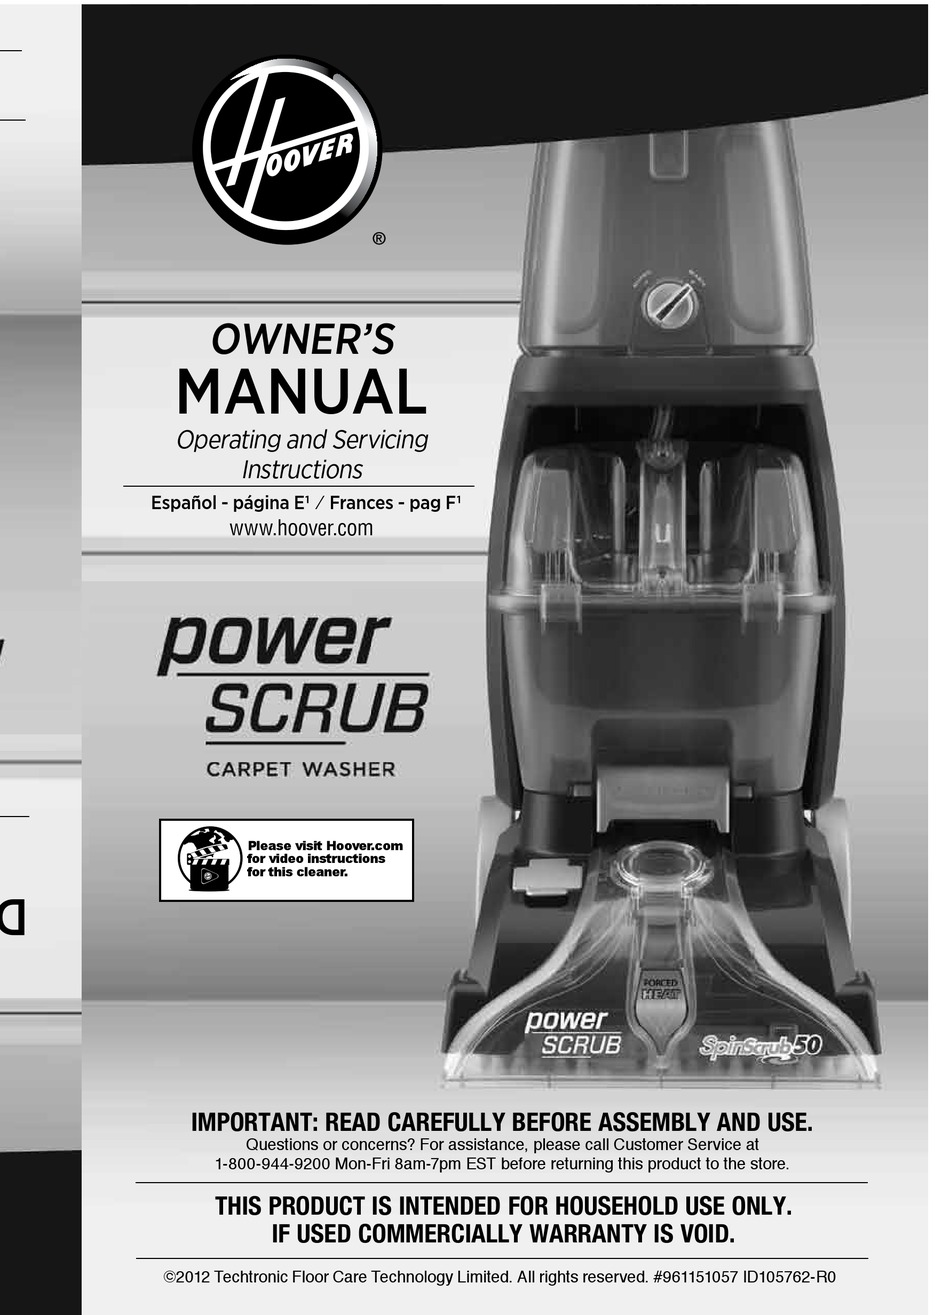 HOOVER POWER SCRUB OWNER'S MANUAL Pdf Download | ManualsLib